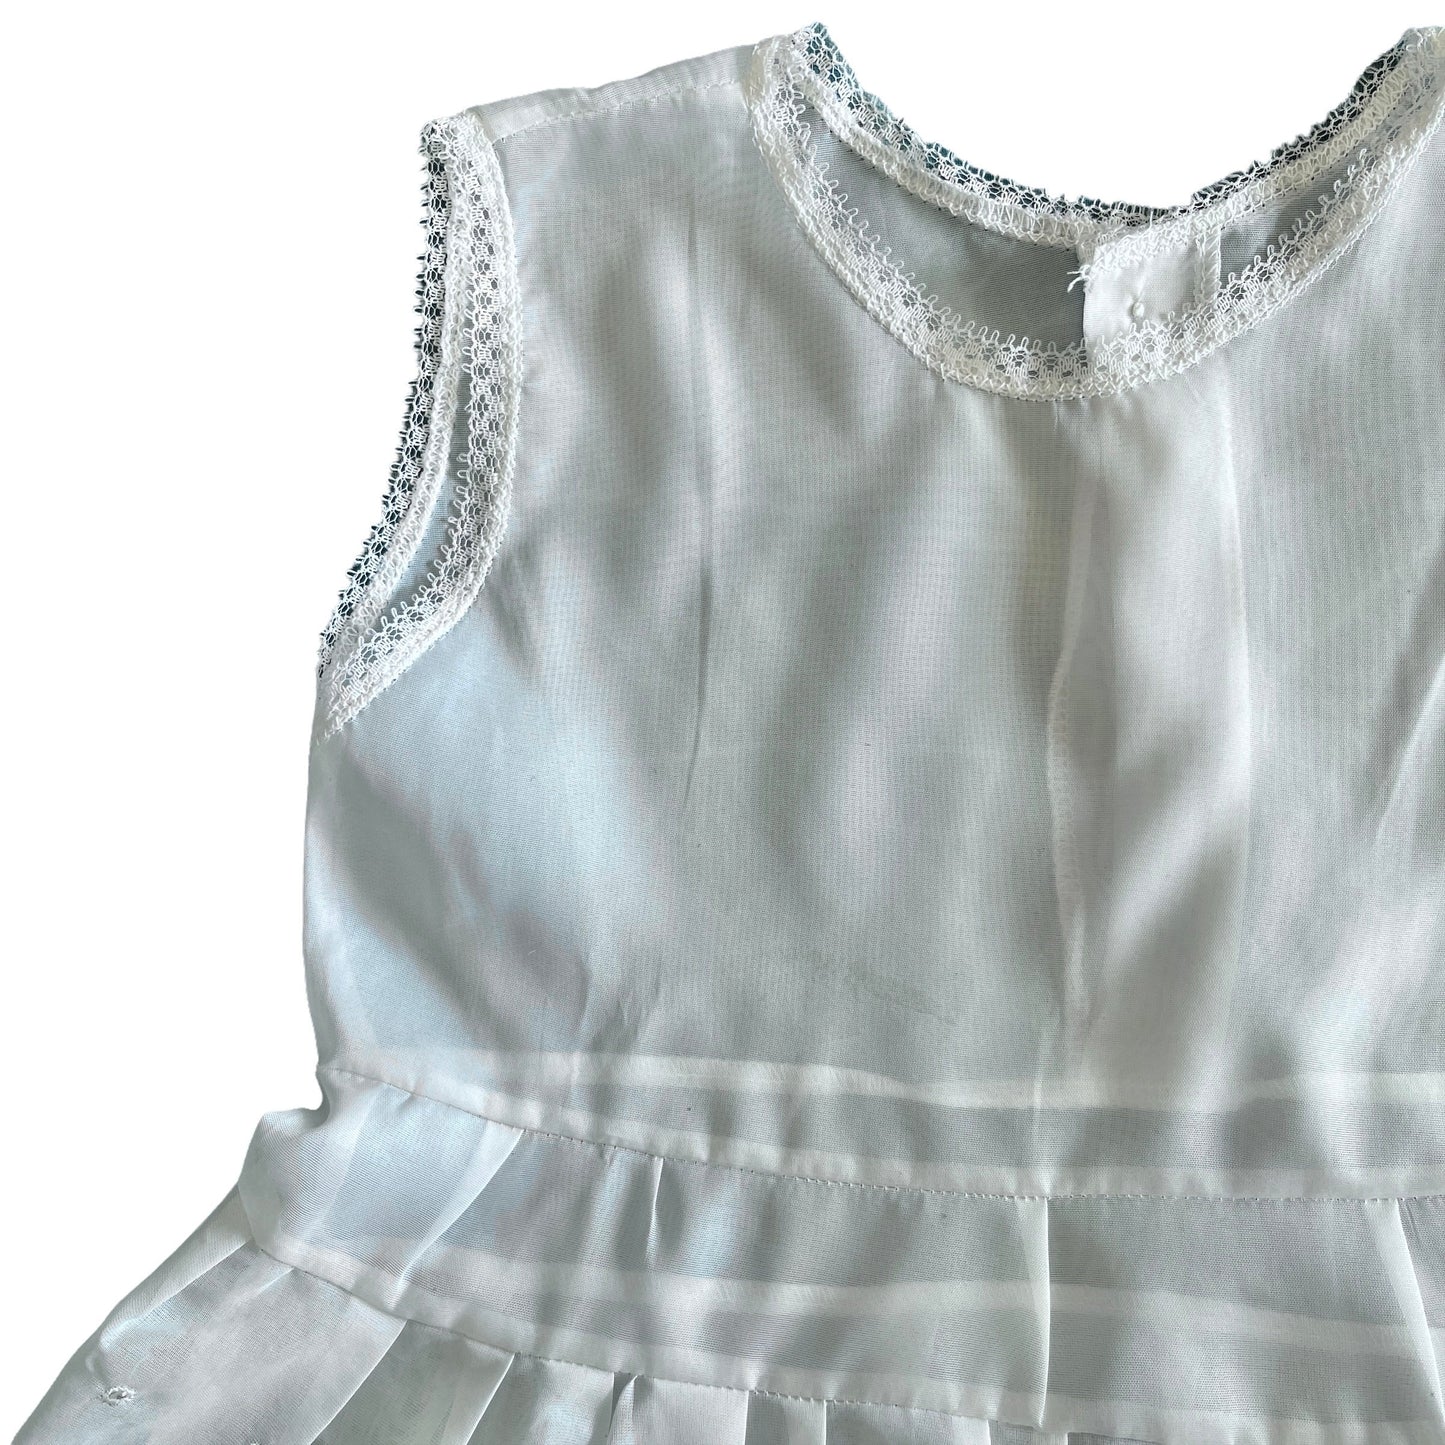 Vintage 1960's White Sheer Petticoat Dress / 6-9M